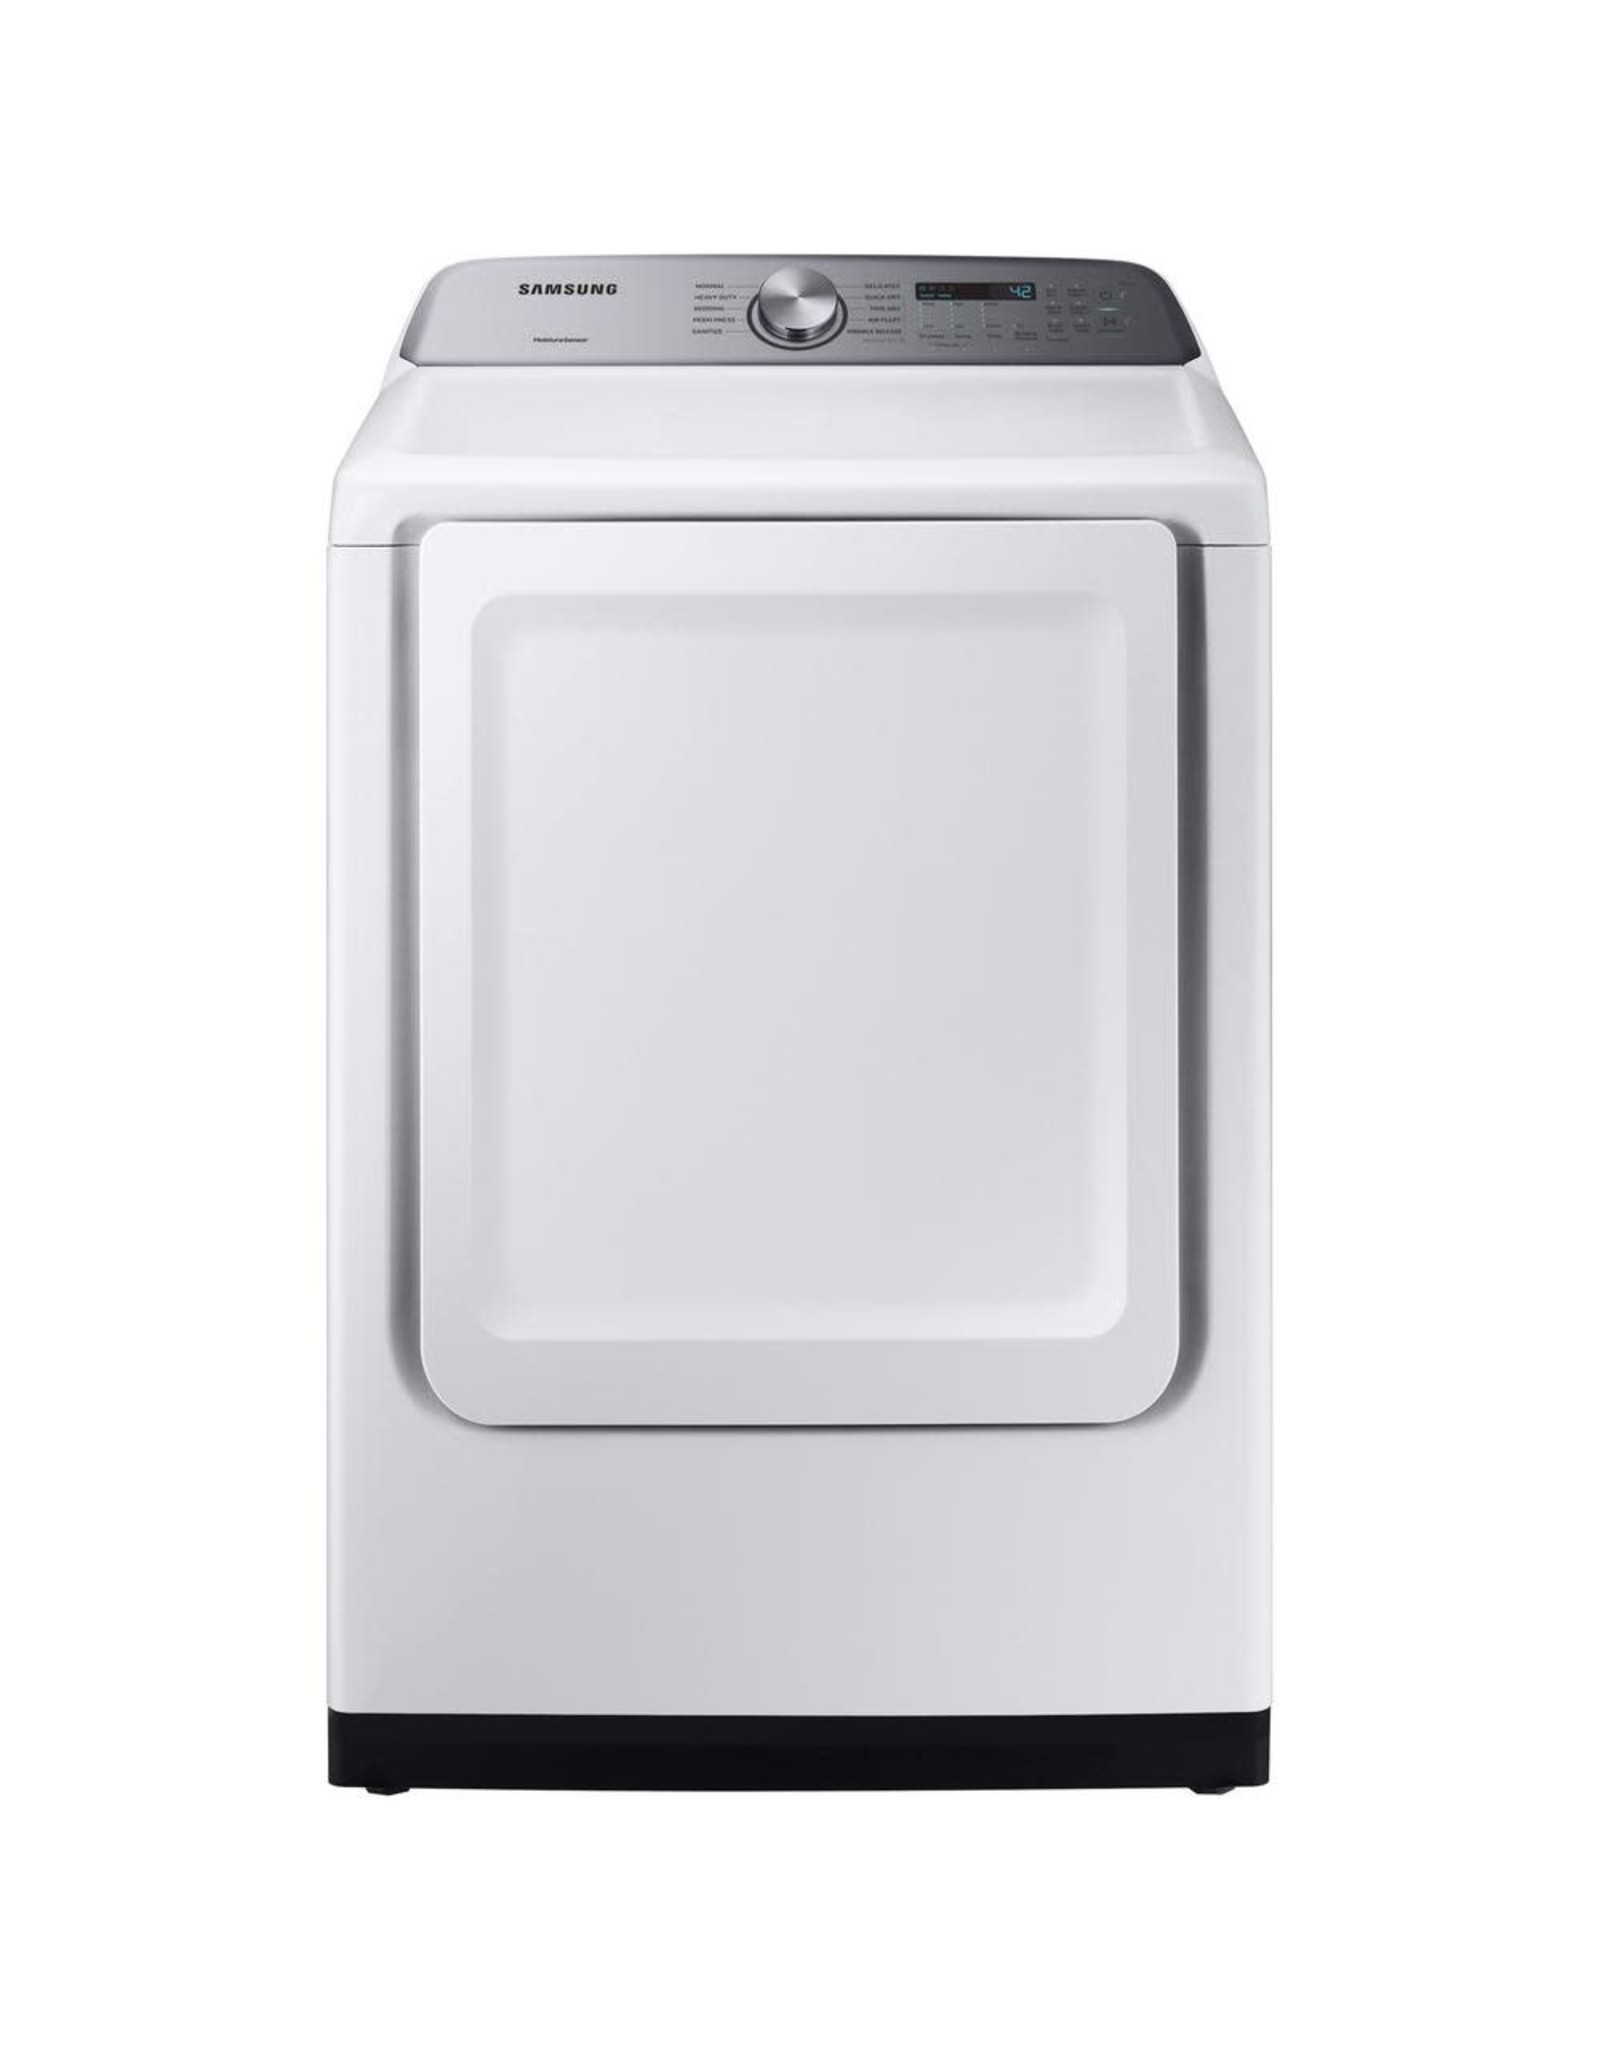 SAMSUNG DVE50R5200W 7.4 cu. ft. White Electric Dryer with Sensor Dry